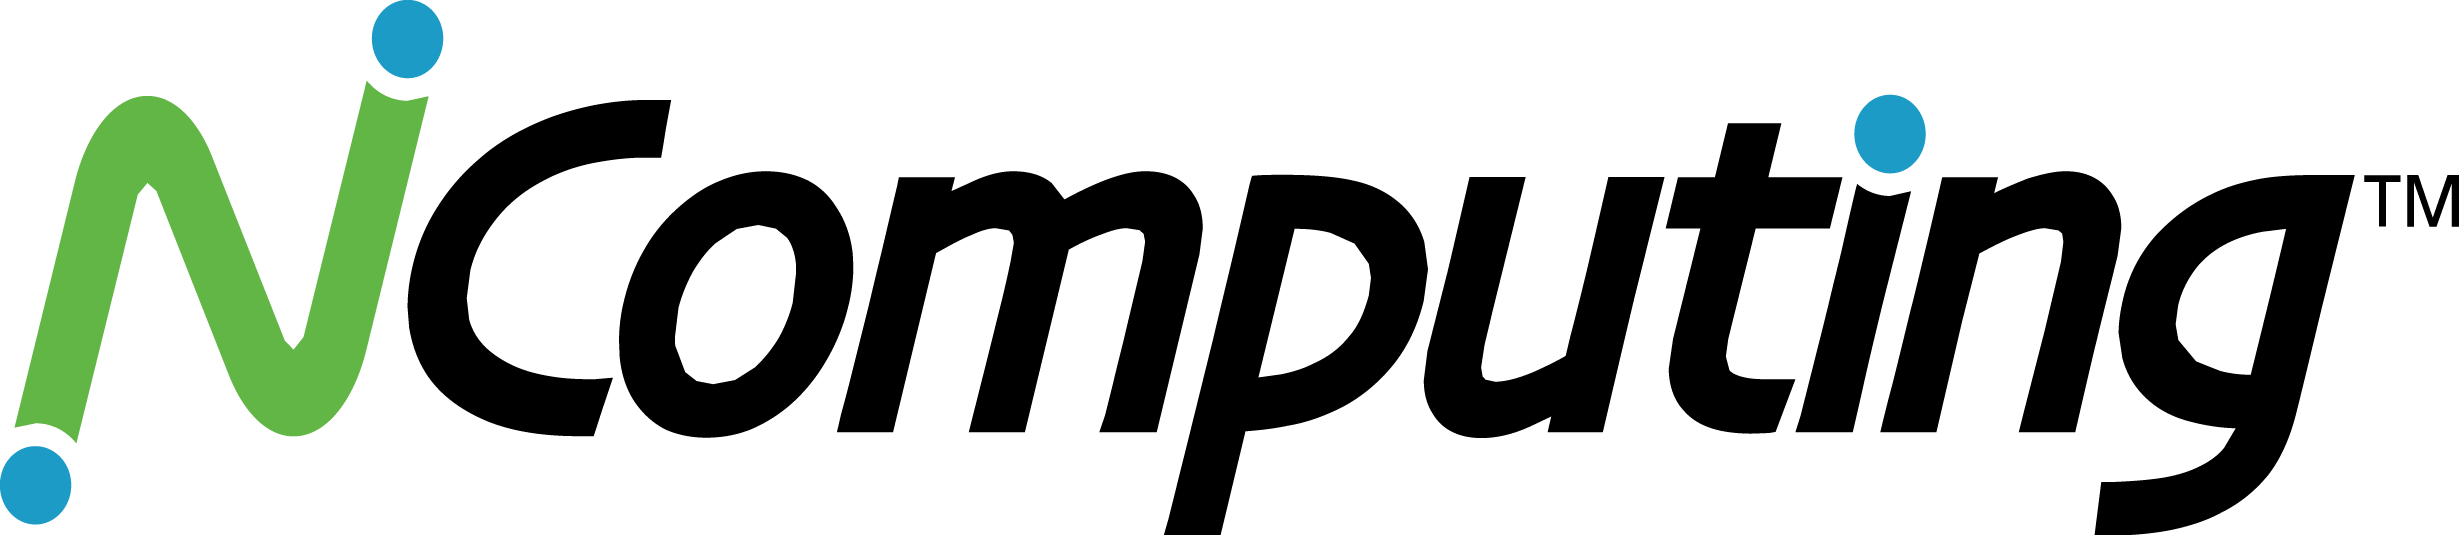 Ncomputing Logo